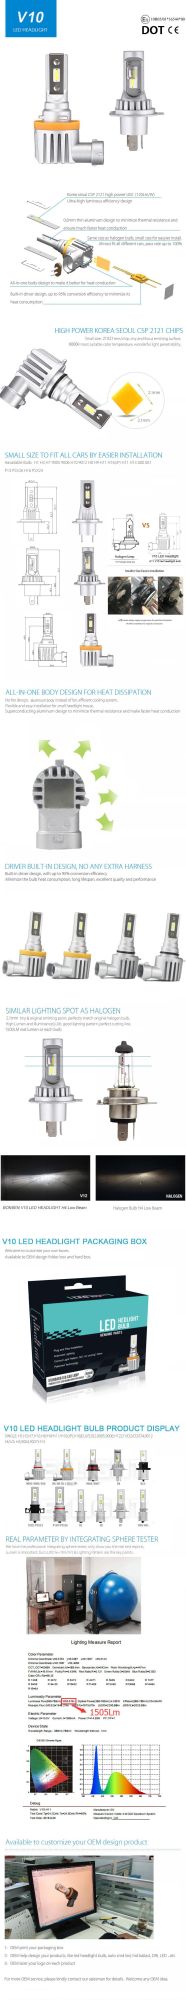 V10 Compact LED Headlight Bulb H1 Fog Light H1 H3 H4 H11 H7 Car LED Headlight Bulb to Replace Halogen